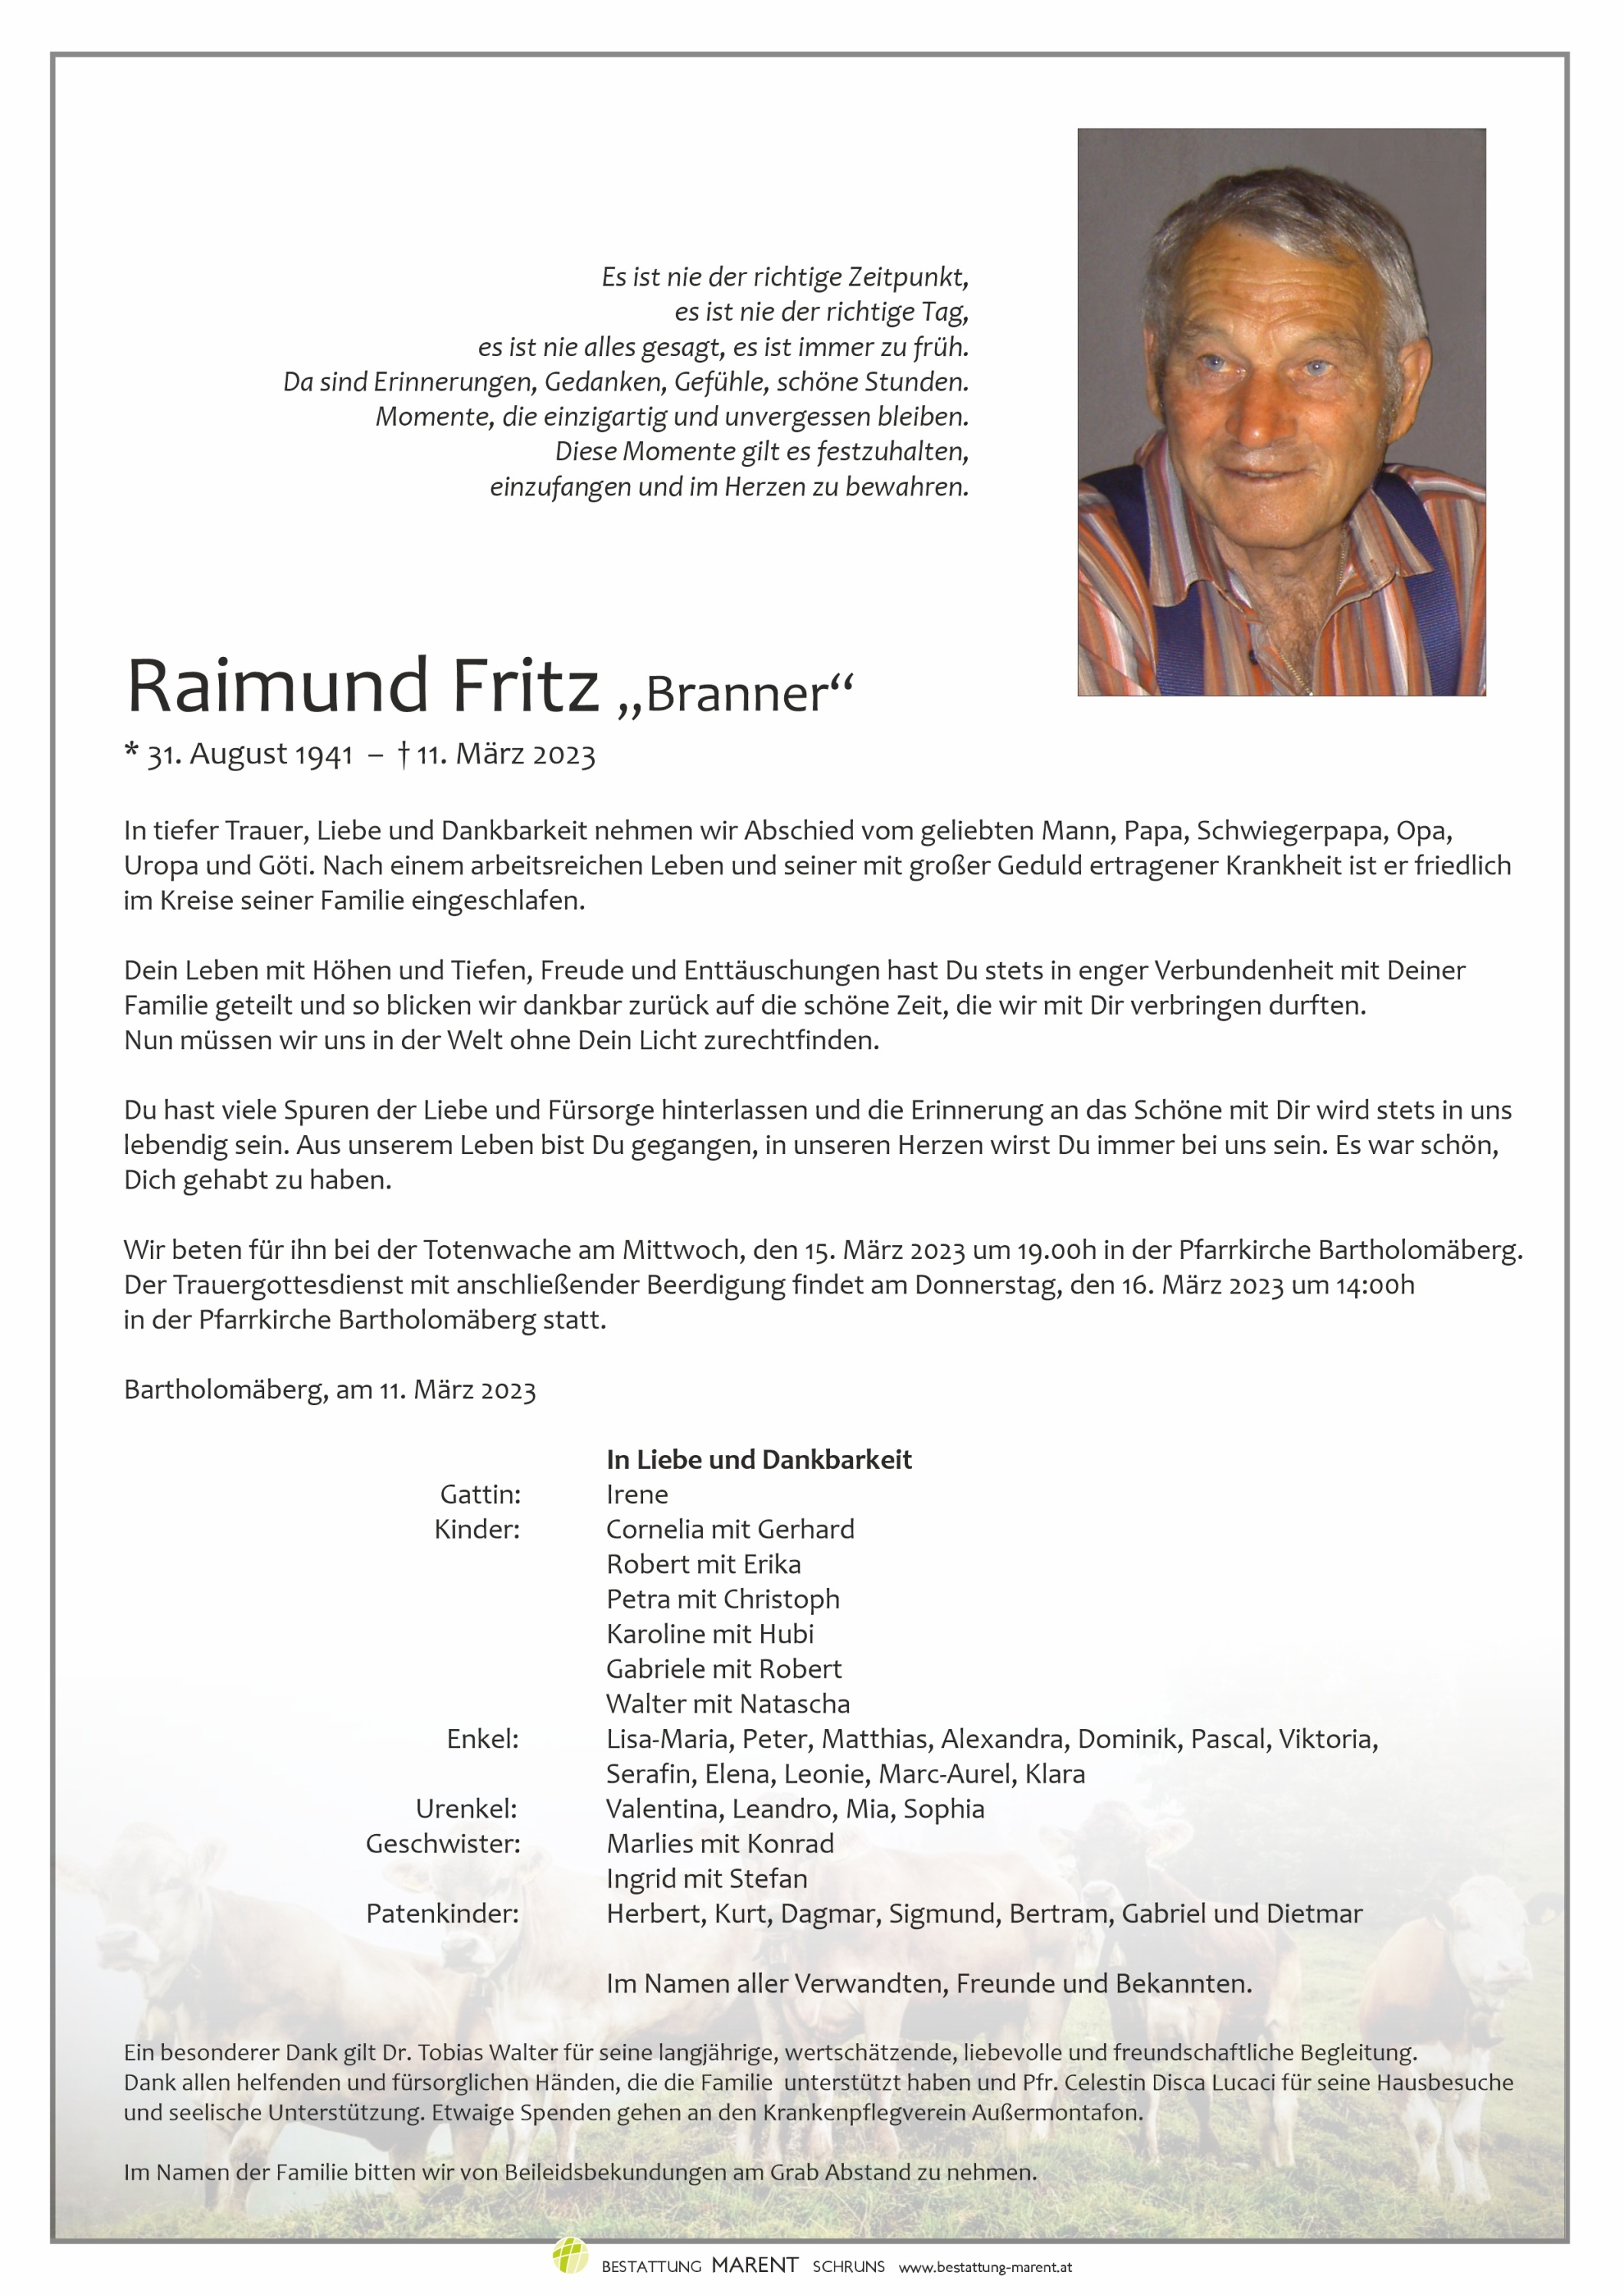 Raimund Fritz